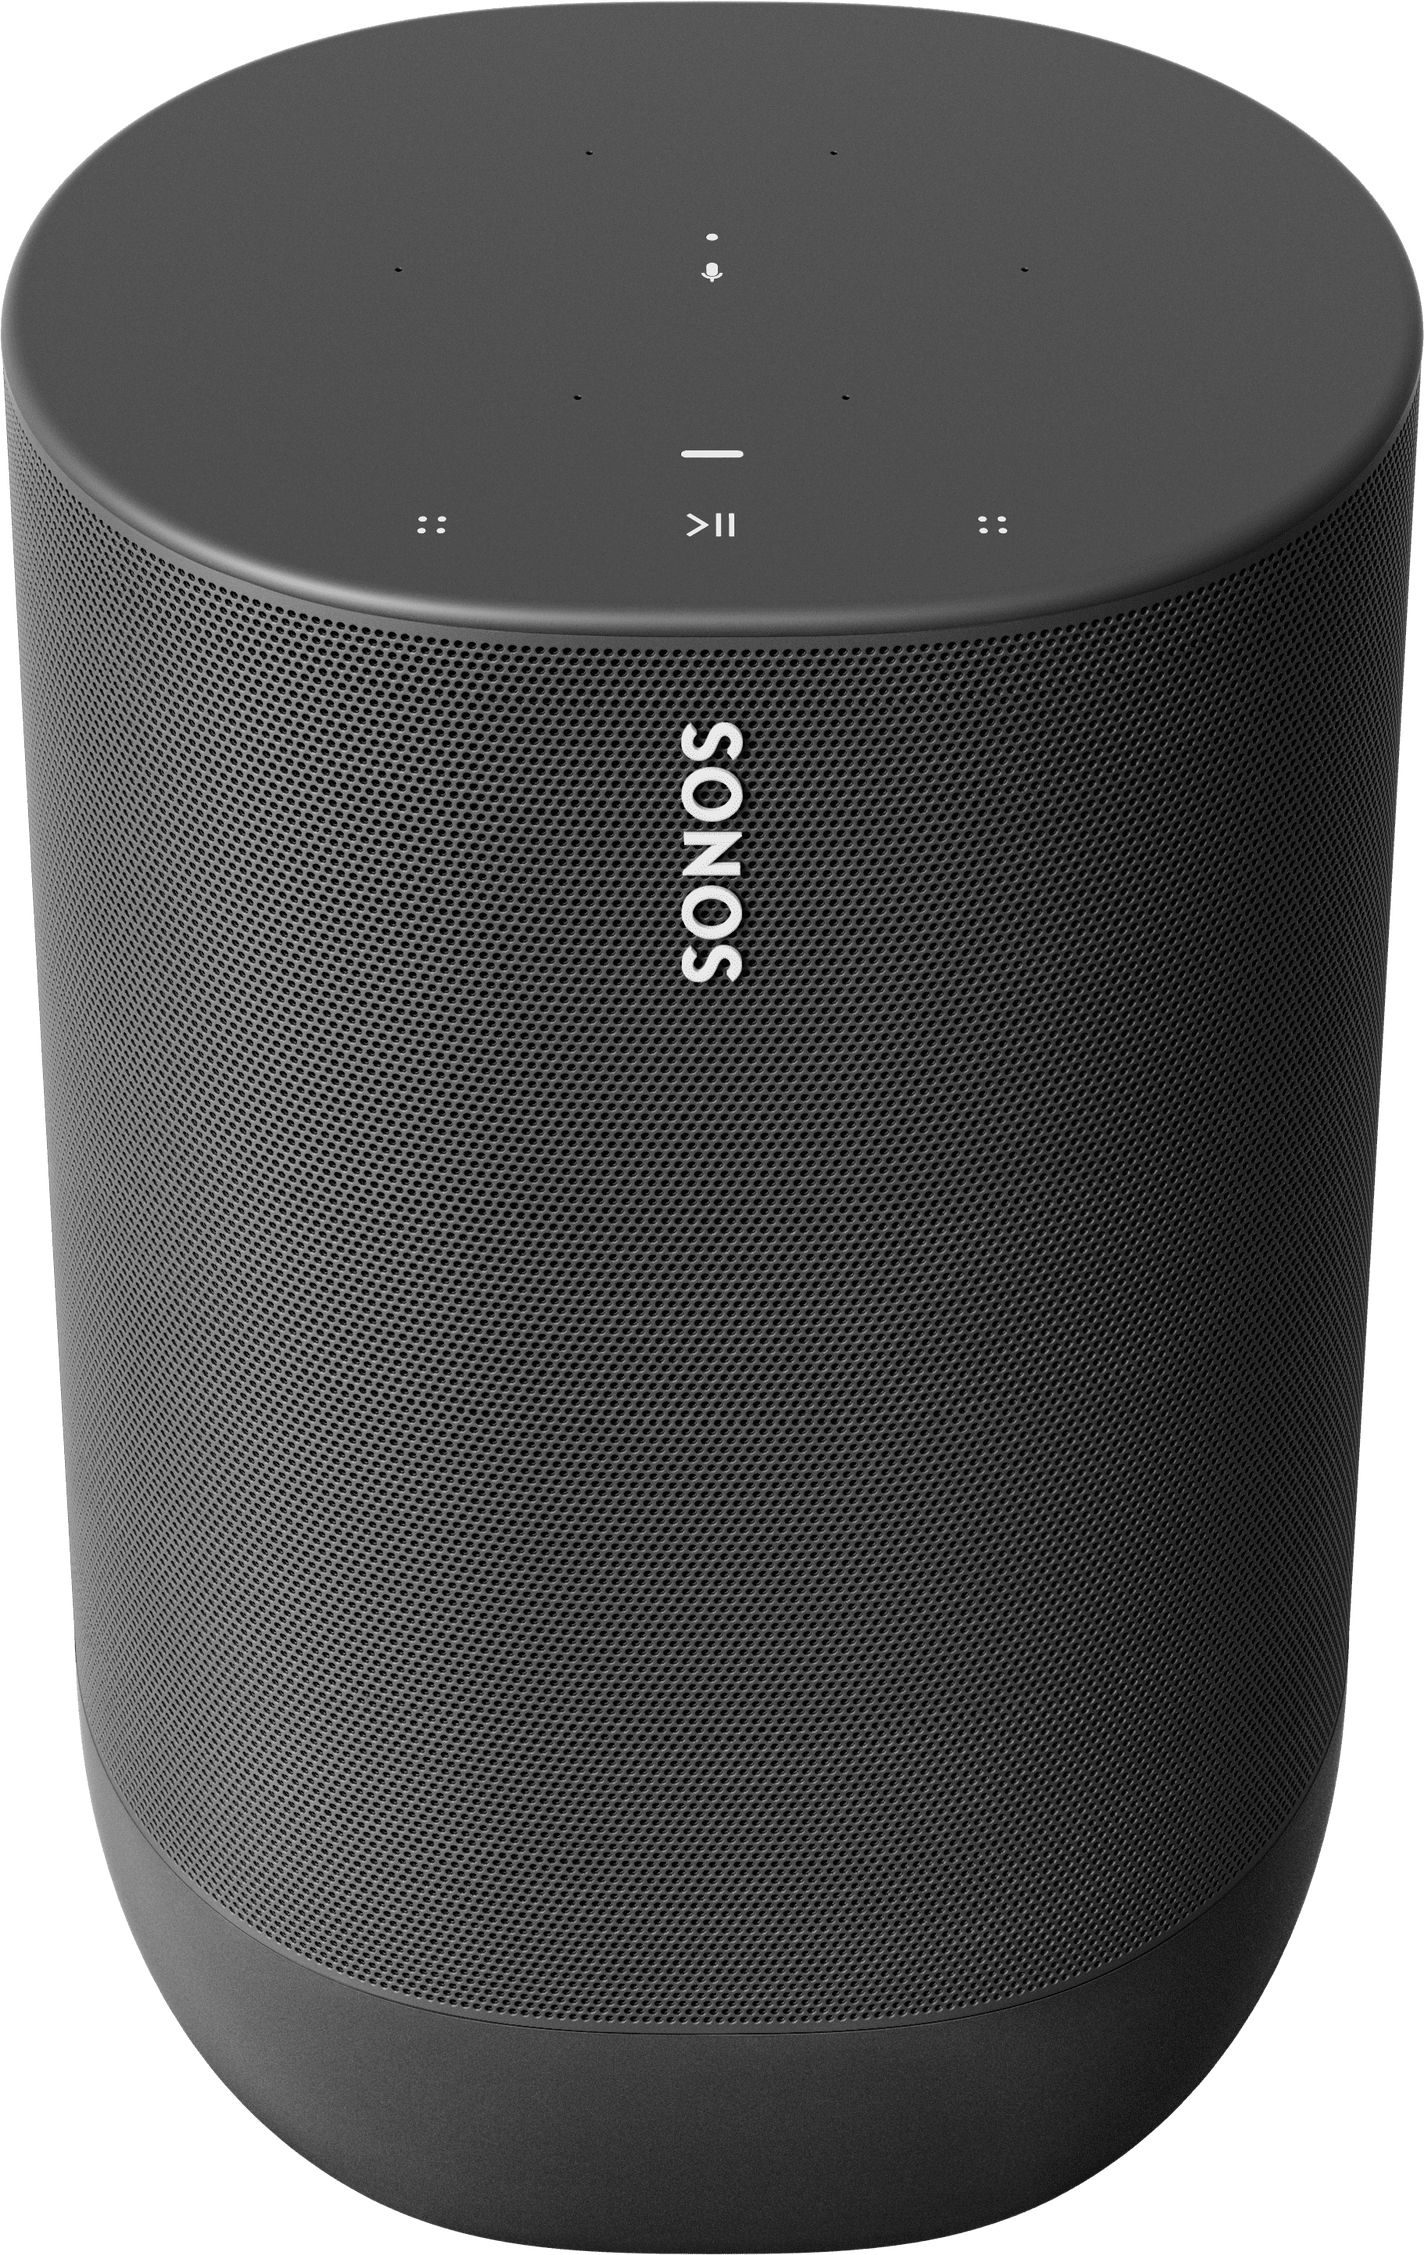 Move: A Portable WiFi + Bluetooth Speaker | Sonos | Sonos